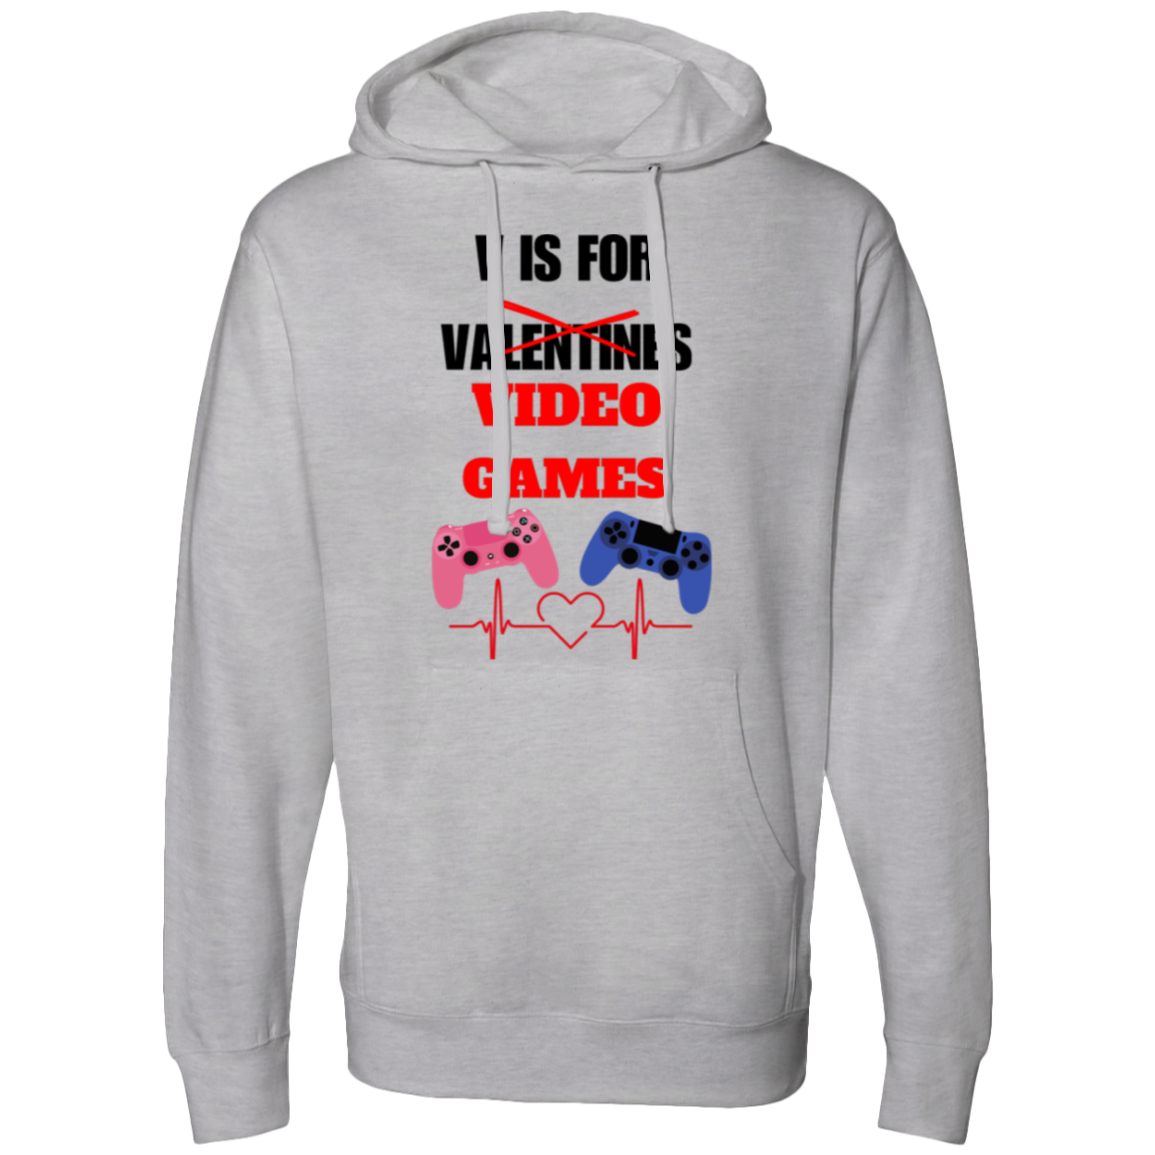 V IS FOR VALENTINE Hooded Sweatshirt